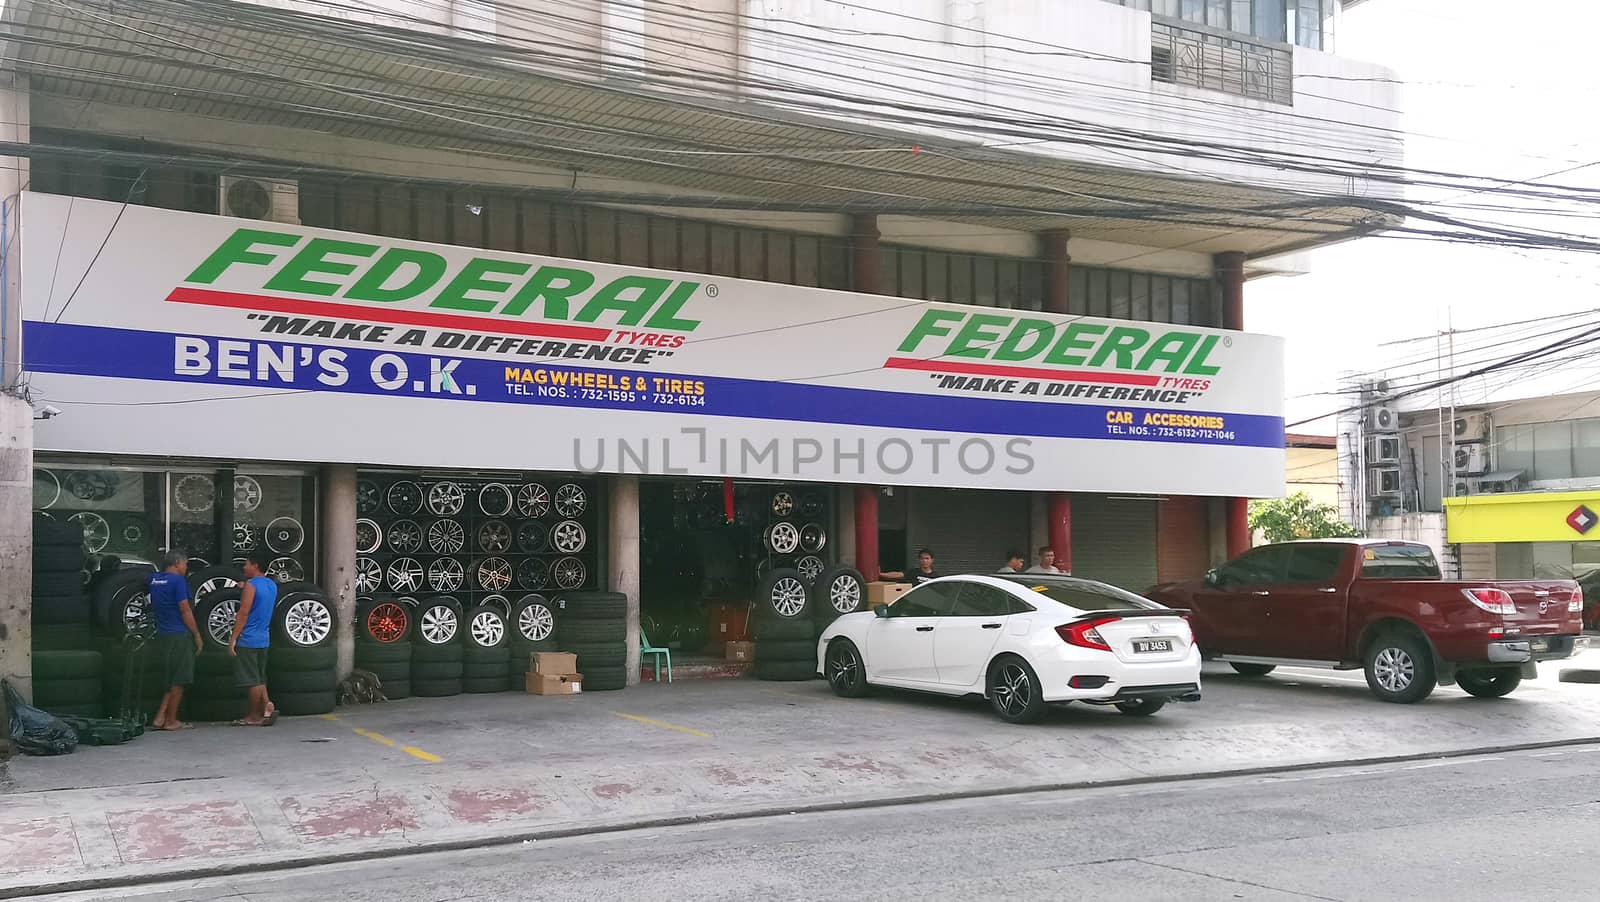 QUEZON CITY, PH - JUNE 2 - Federal tires shop facade on June 2, 2018 in Quezon City, Philippines.